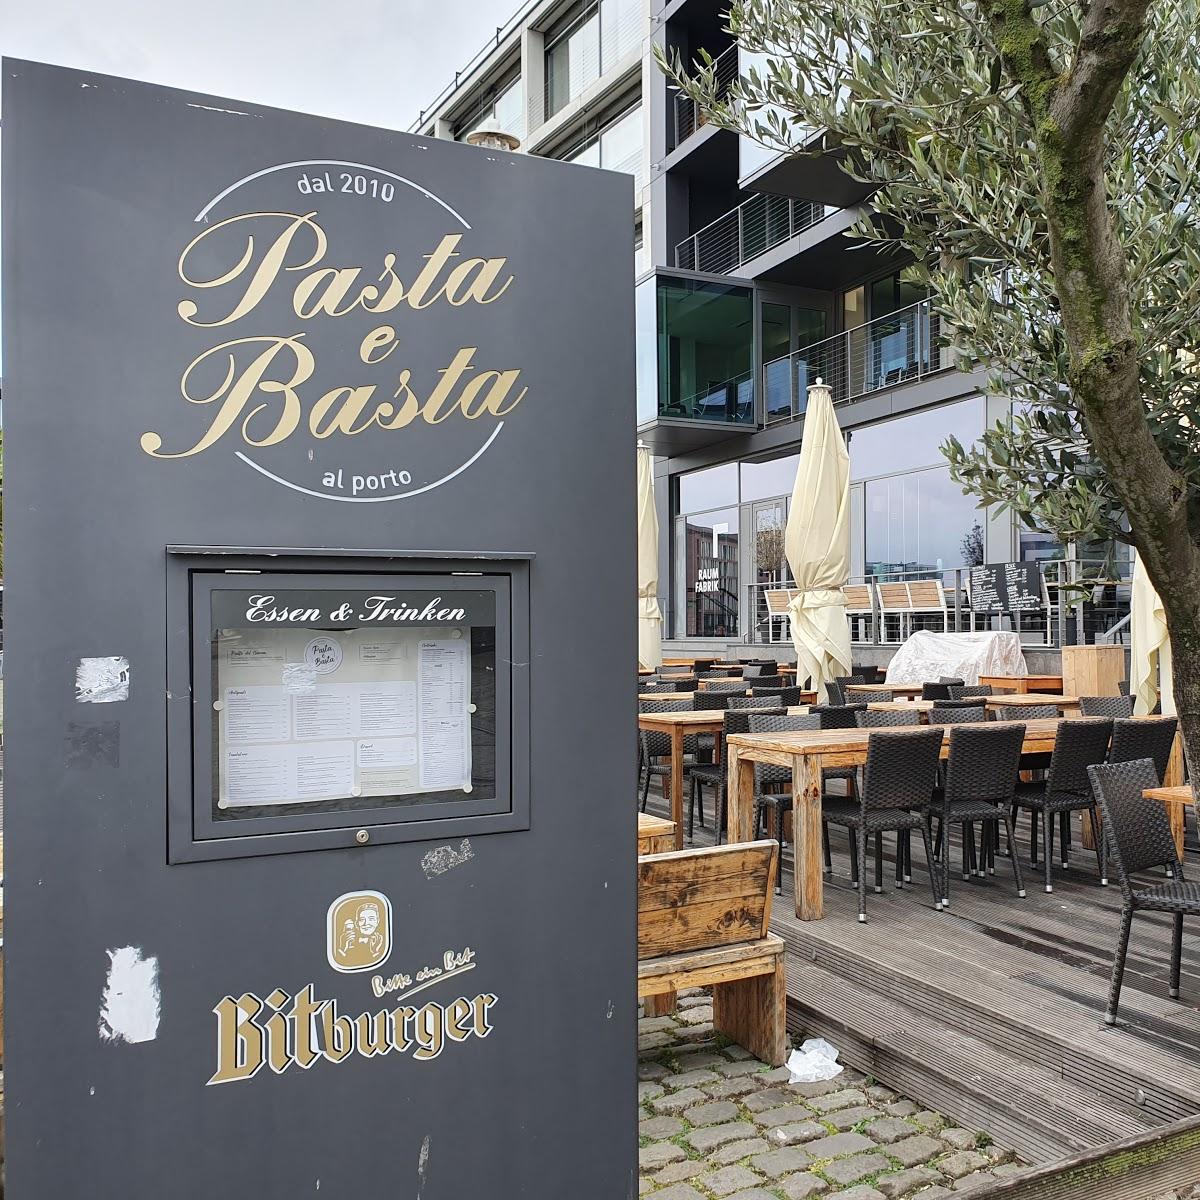 Restaurant "Pasta e Basta al porto" in Münster